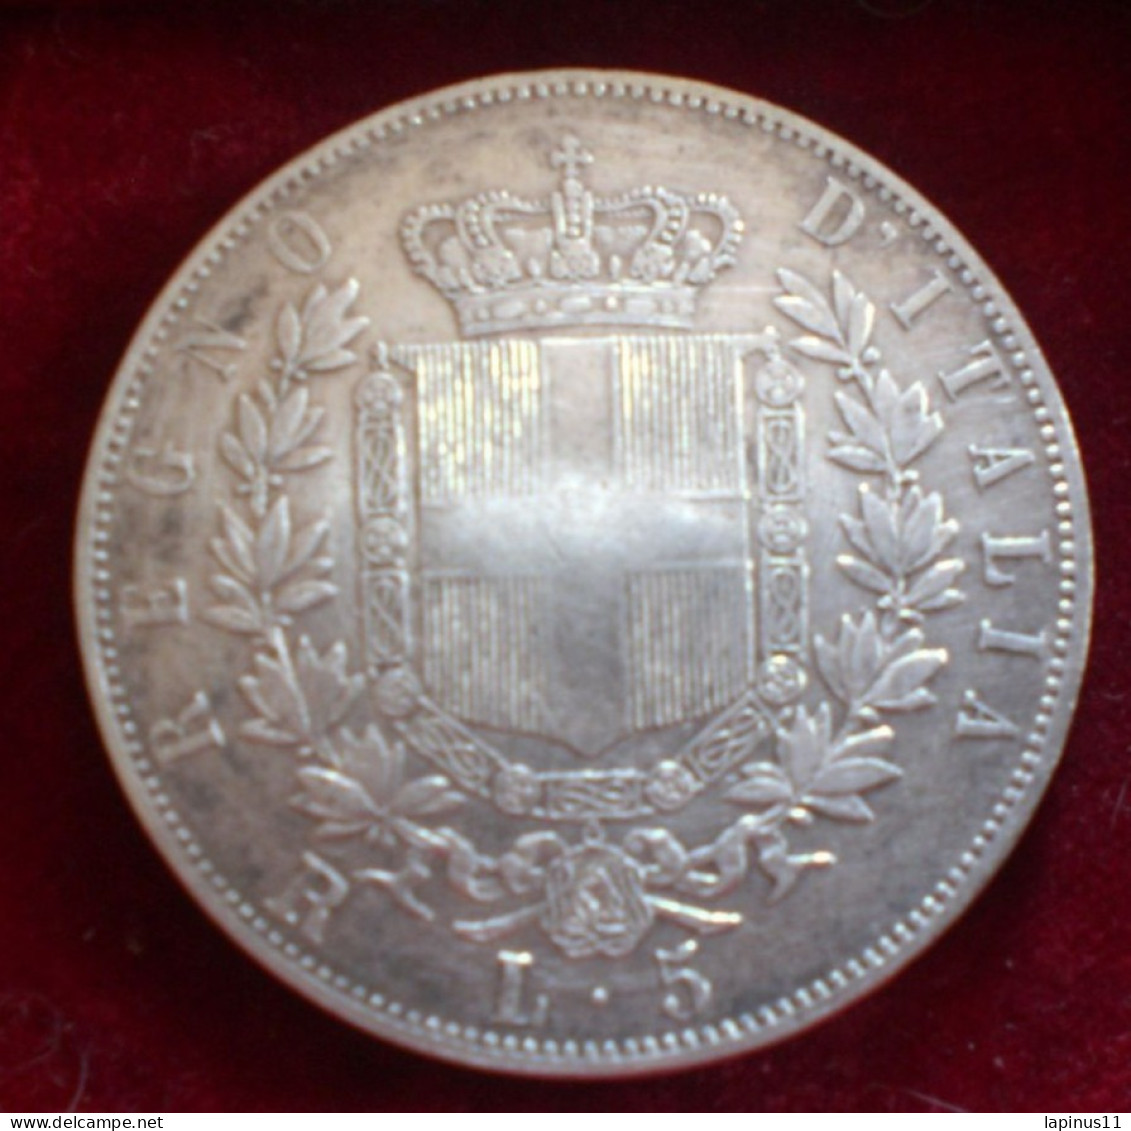 5 LIRE COIN VITTORIO EMANUELE II 1876 SILVER SILVER 25 Gr REF. TAGG. - 1900-1946 : Victor Emmanuel III & Umberto II